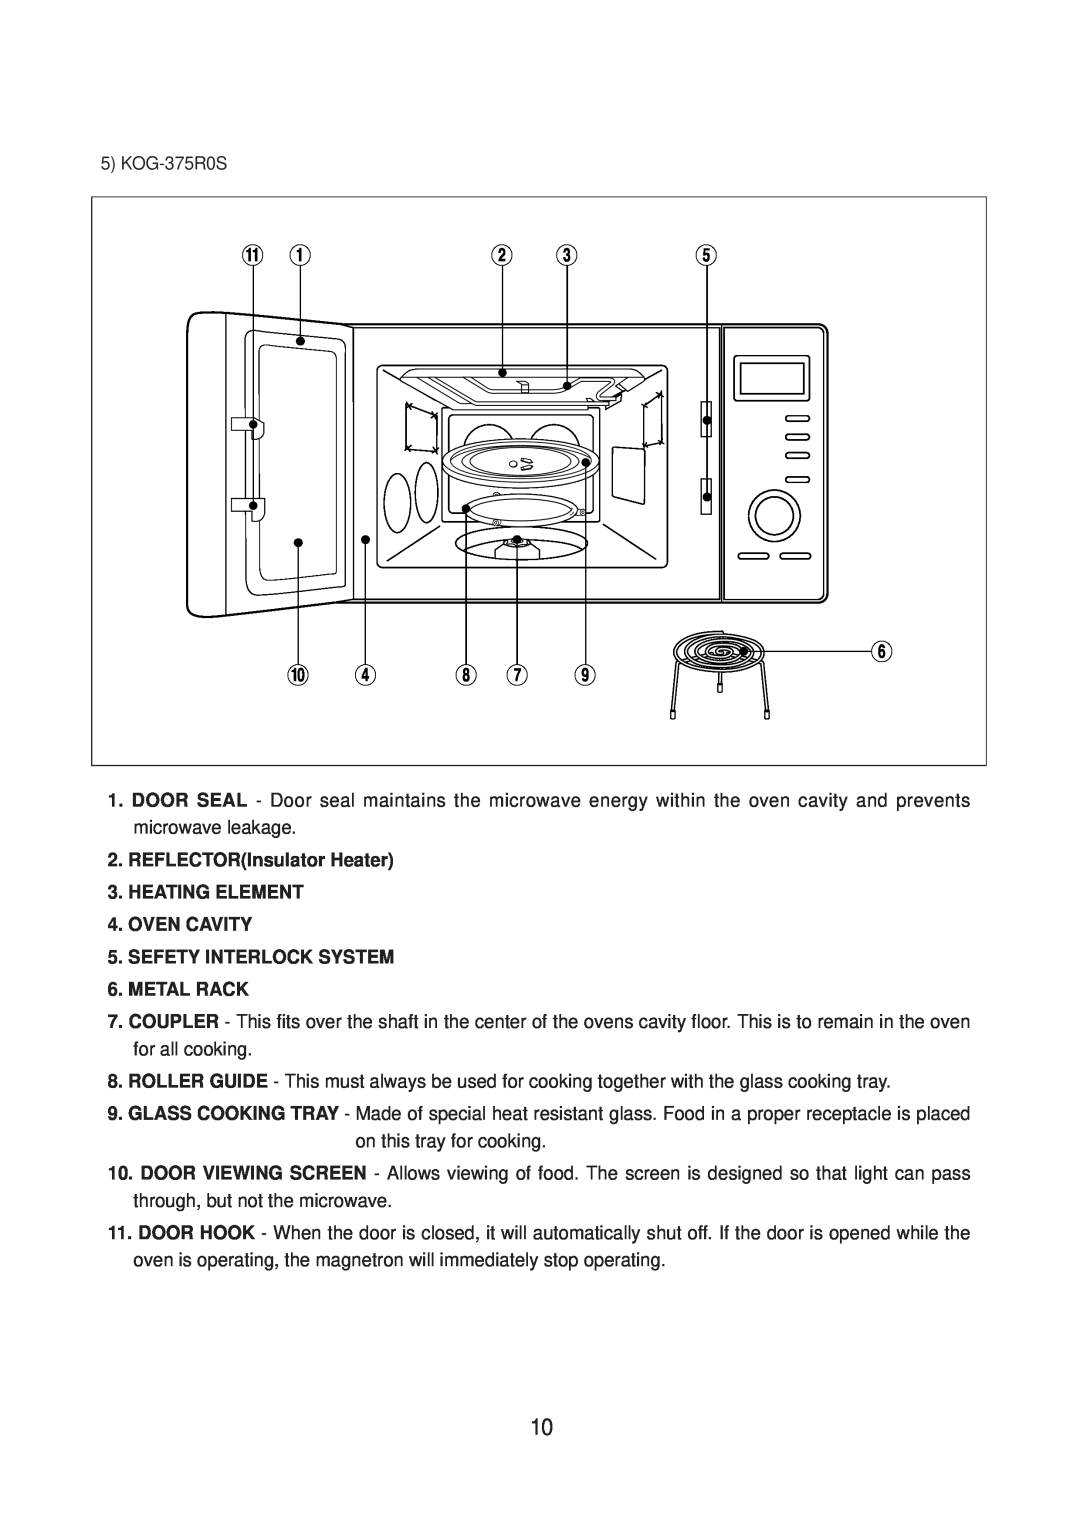 Daewoo KOG-374R0S REFLECTORInsulator Heater 3. HEATING ELEMENT 4. OVEN CAVITY, SEFETY INTERLOCK SYSTEM 6. METAL RACK 